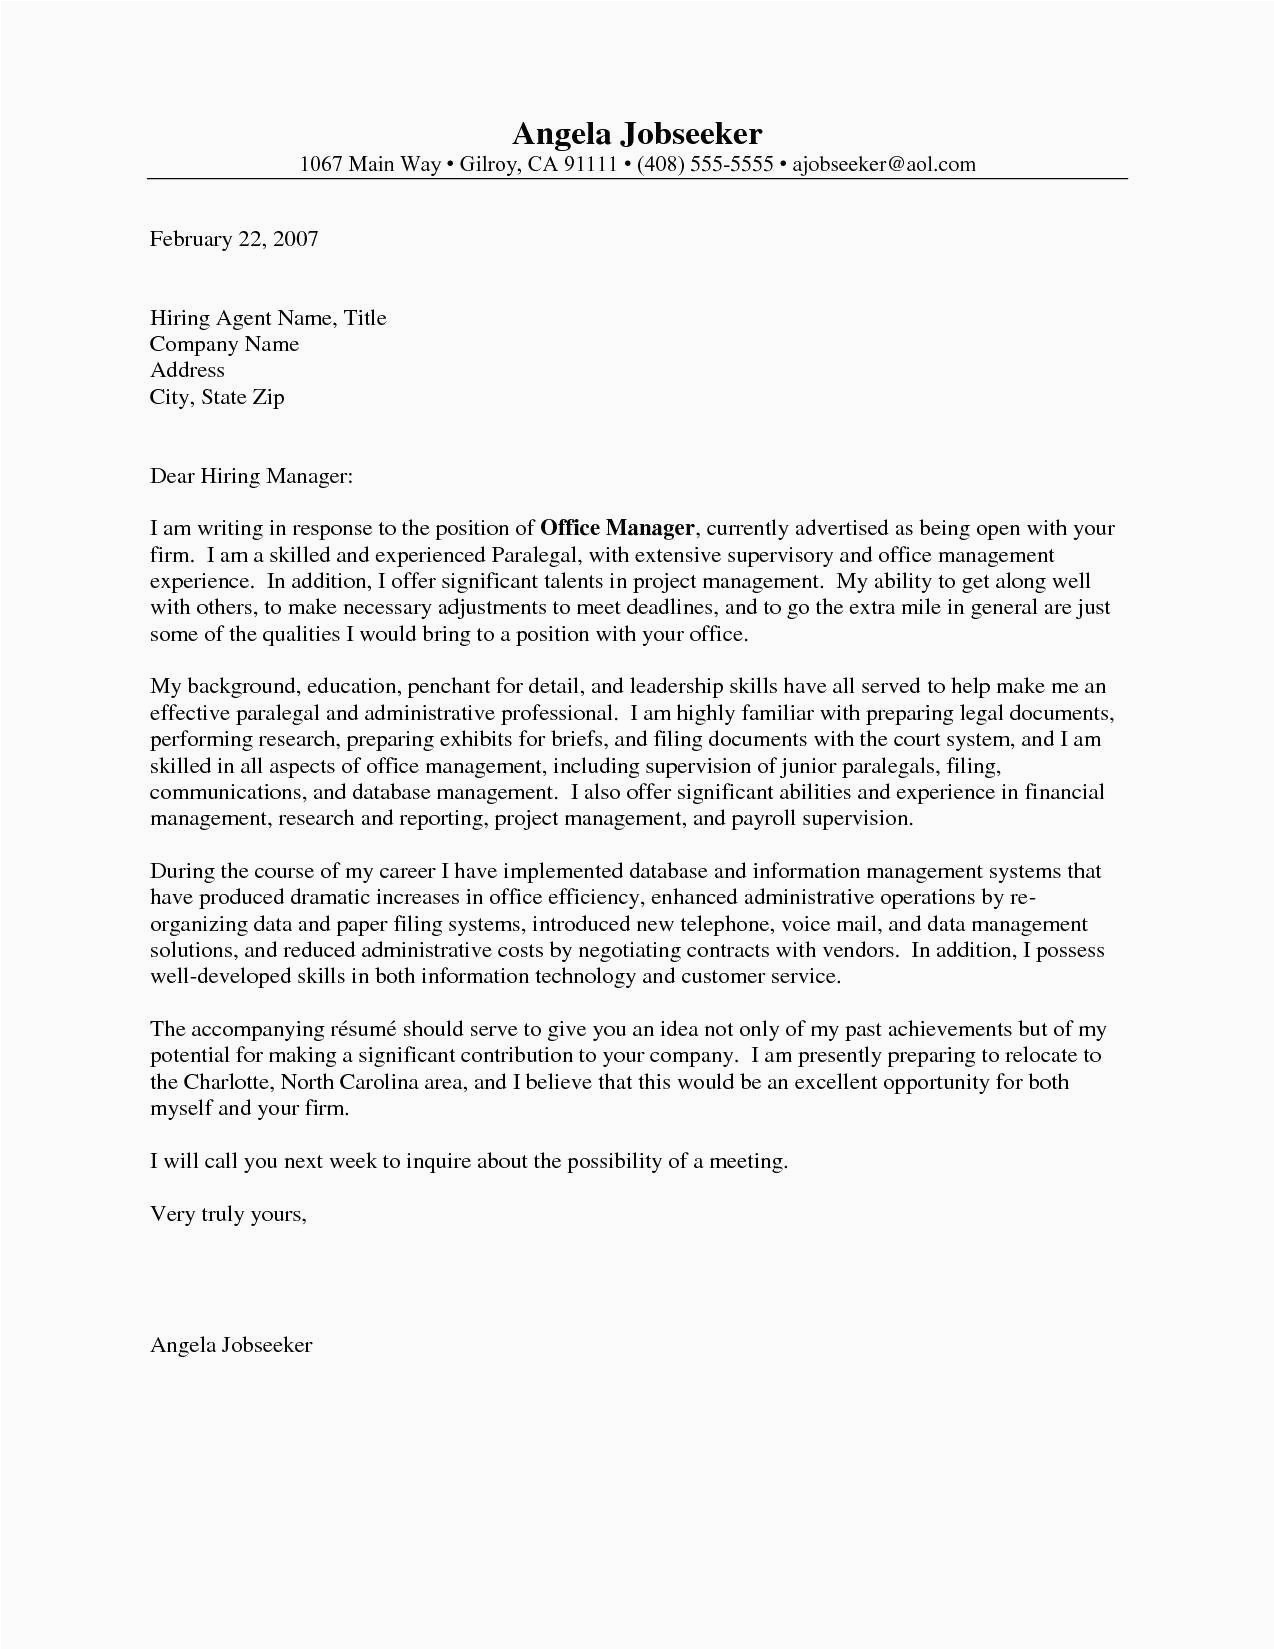 Sample Of Cover Letter for Resume at Harvard 27 Harvard Cover Letter Letterlyfo